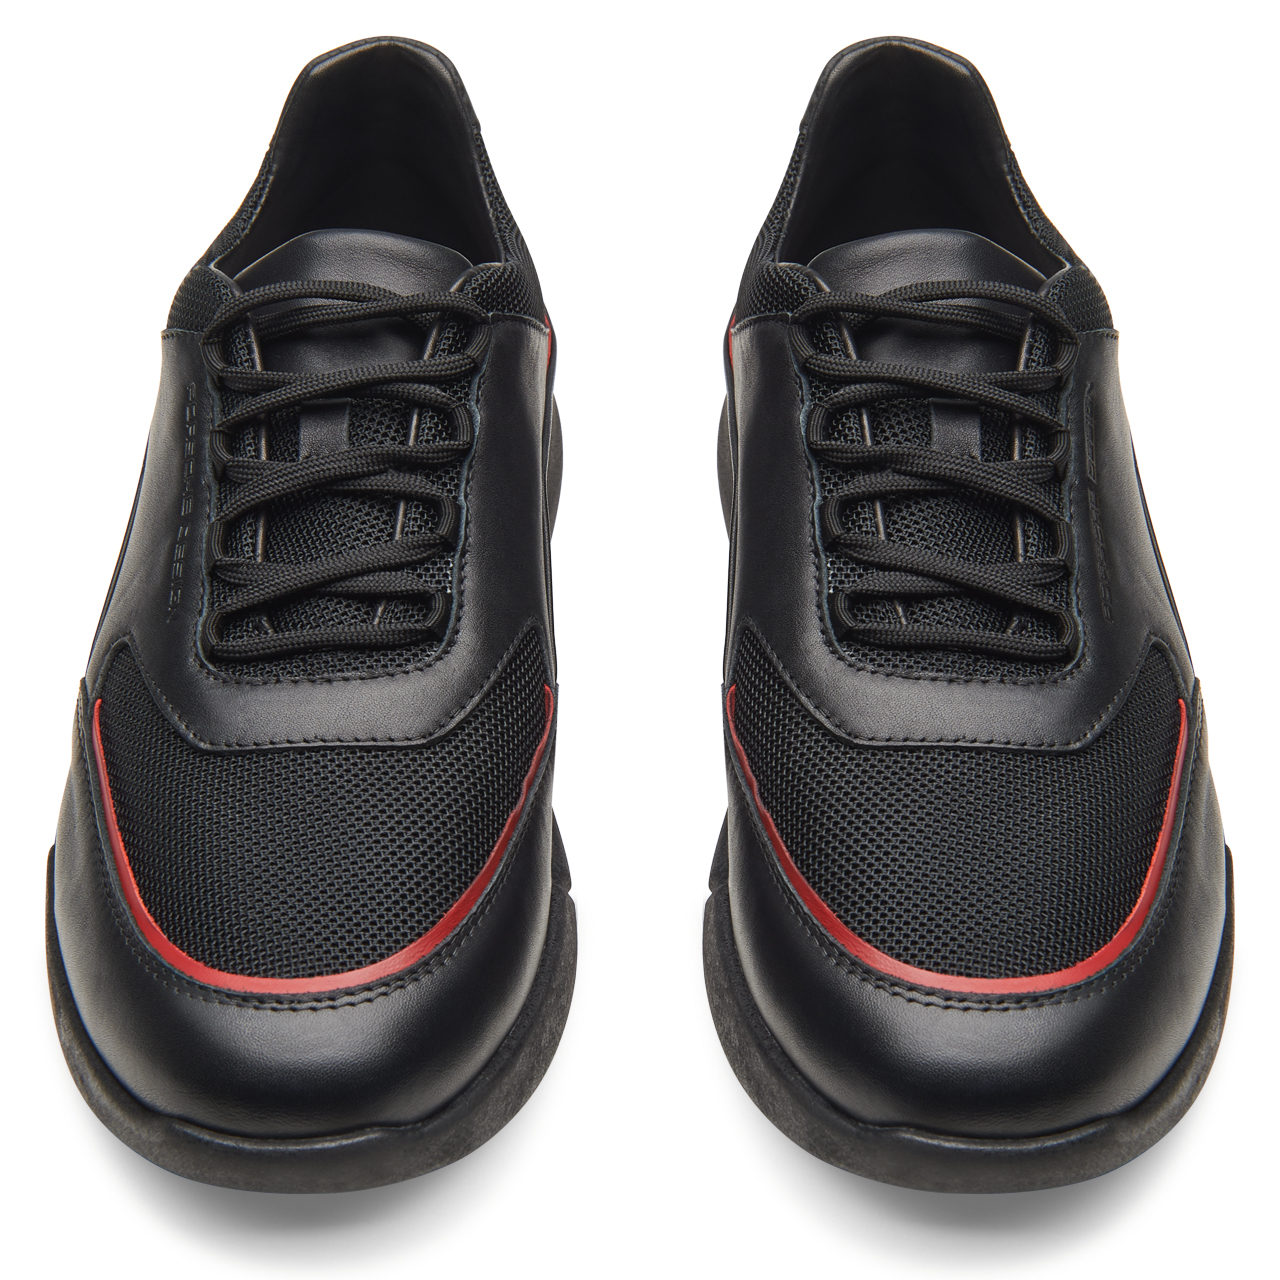 MetroRacer Calf Sneaker - Shoes 